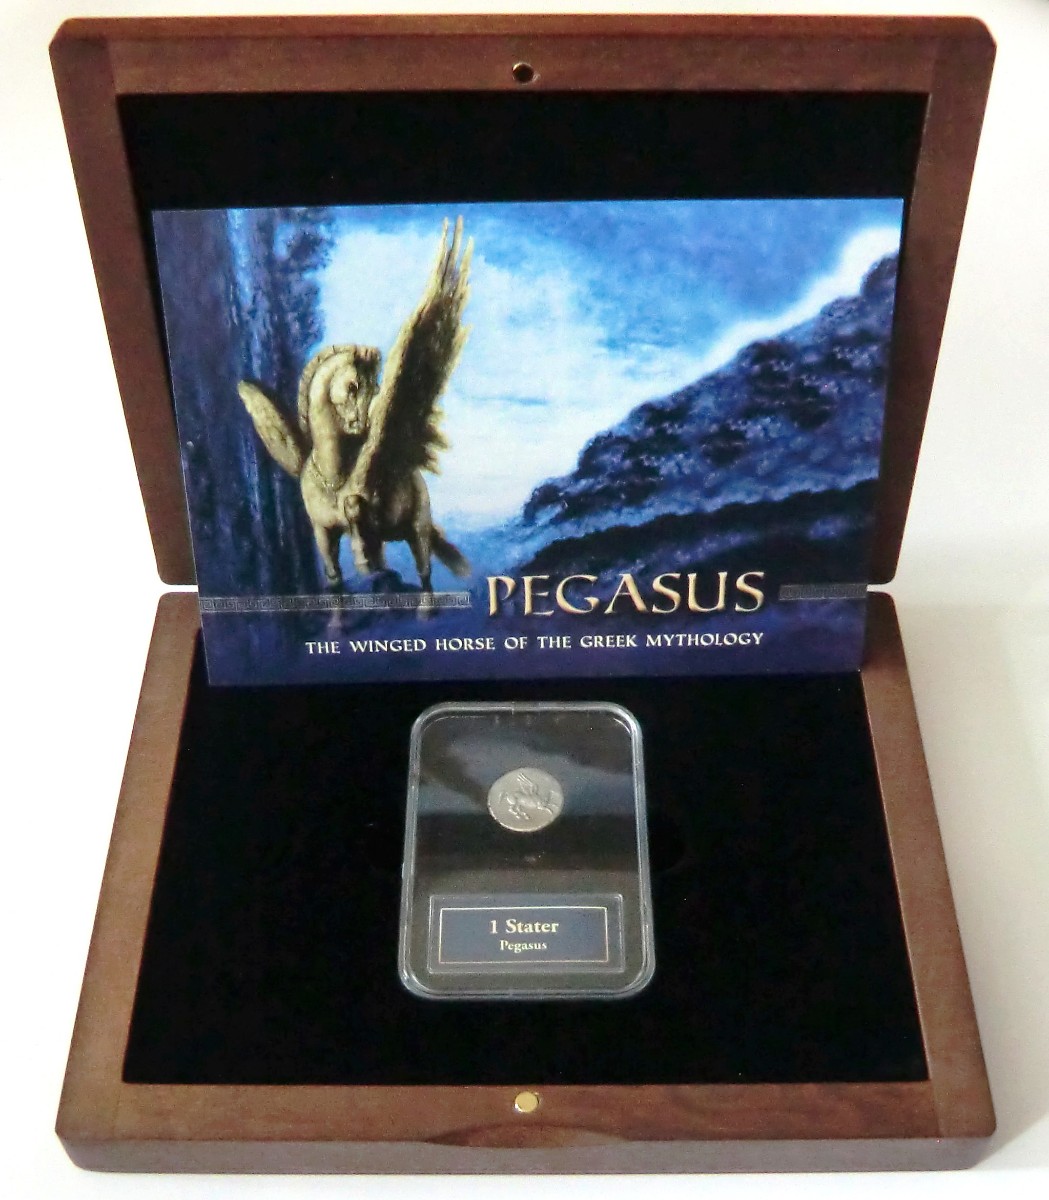 Stříbrná mince 1 stater Pegasus